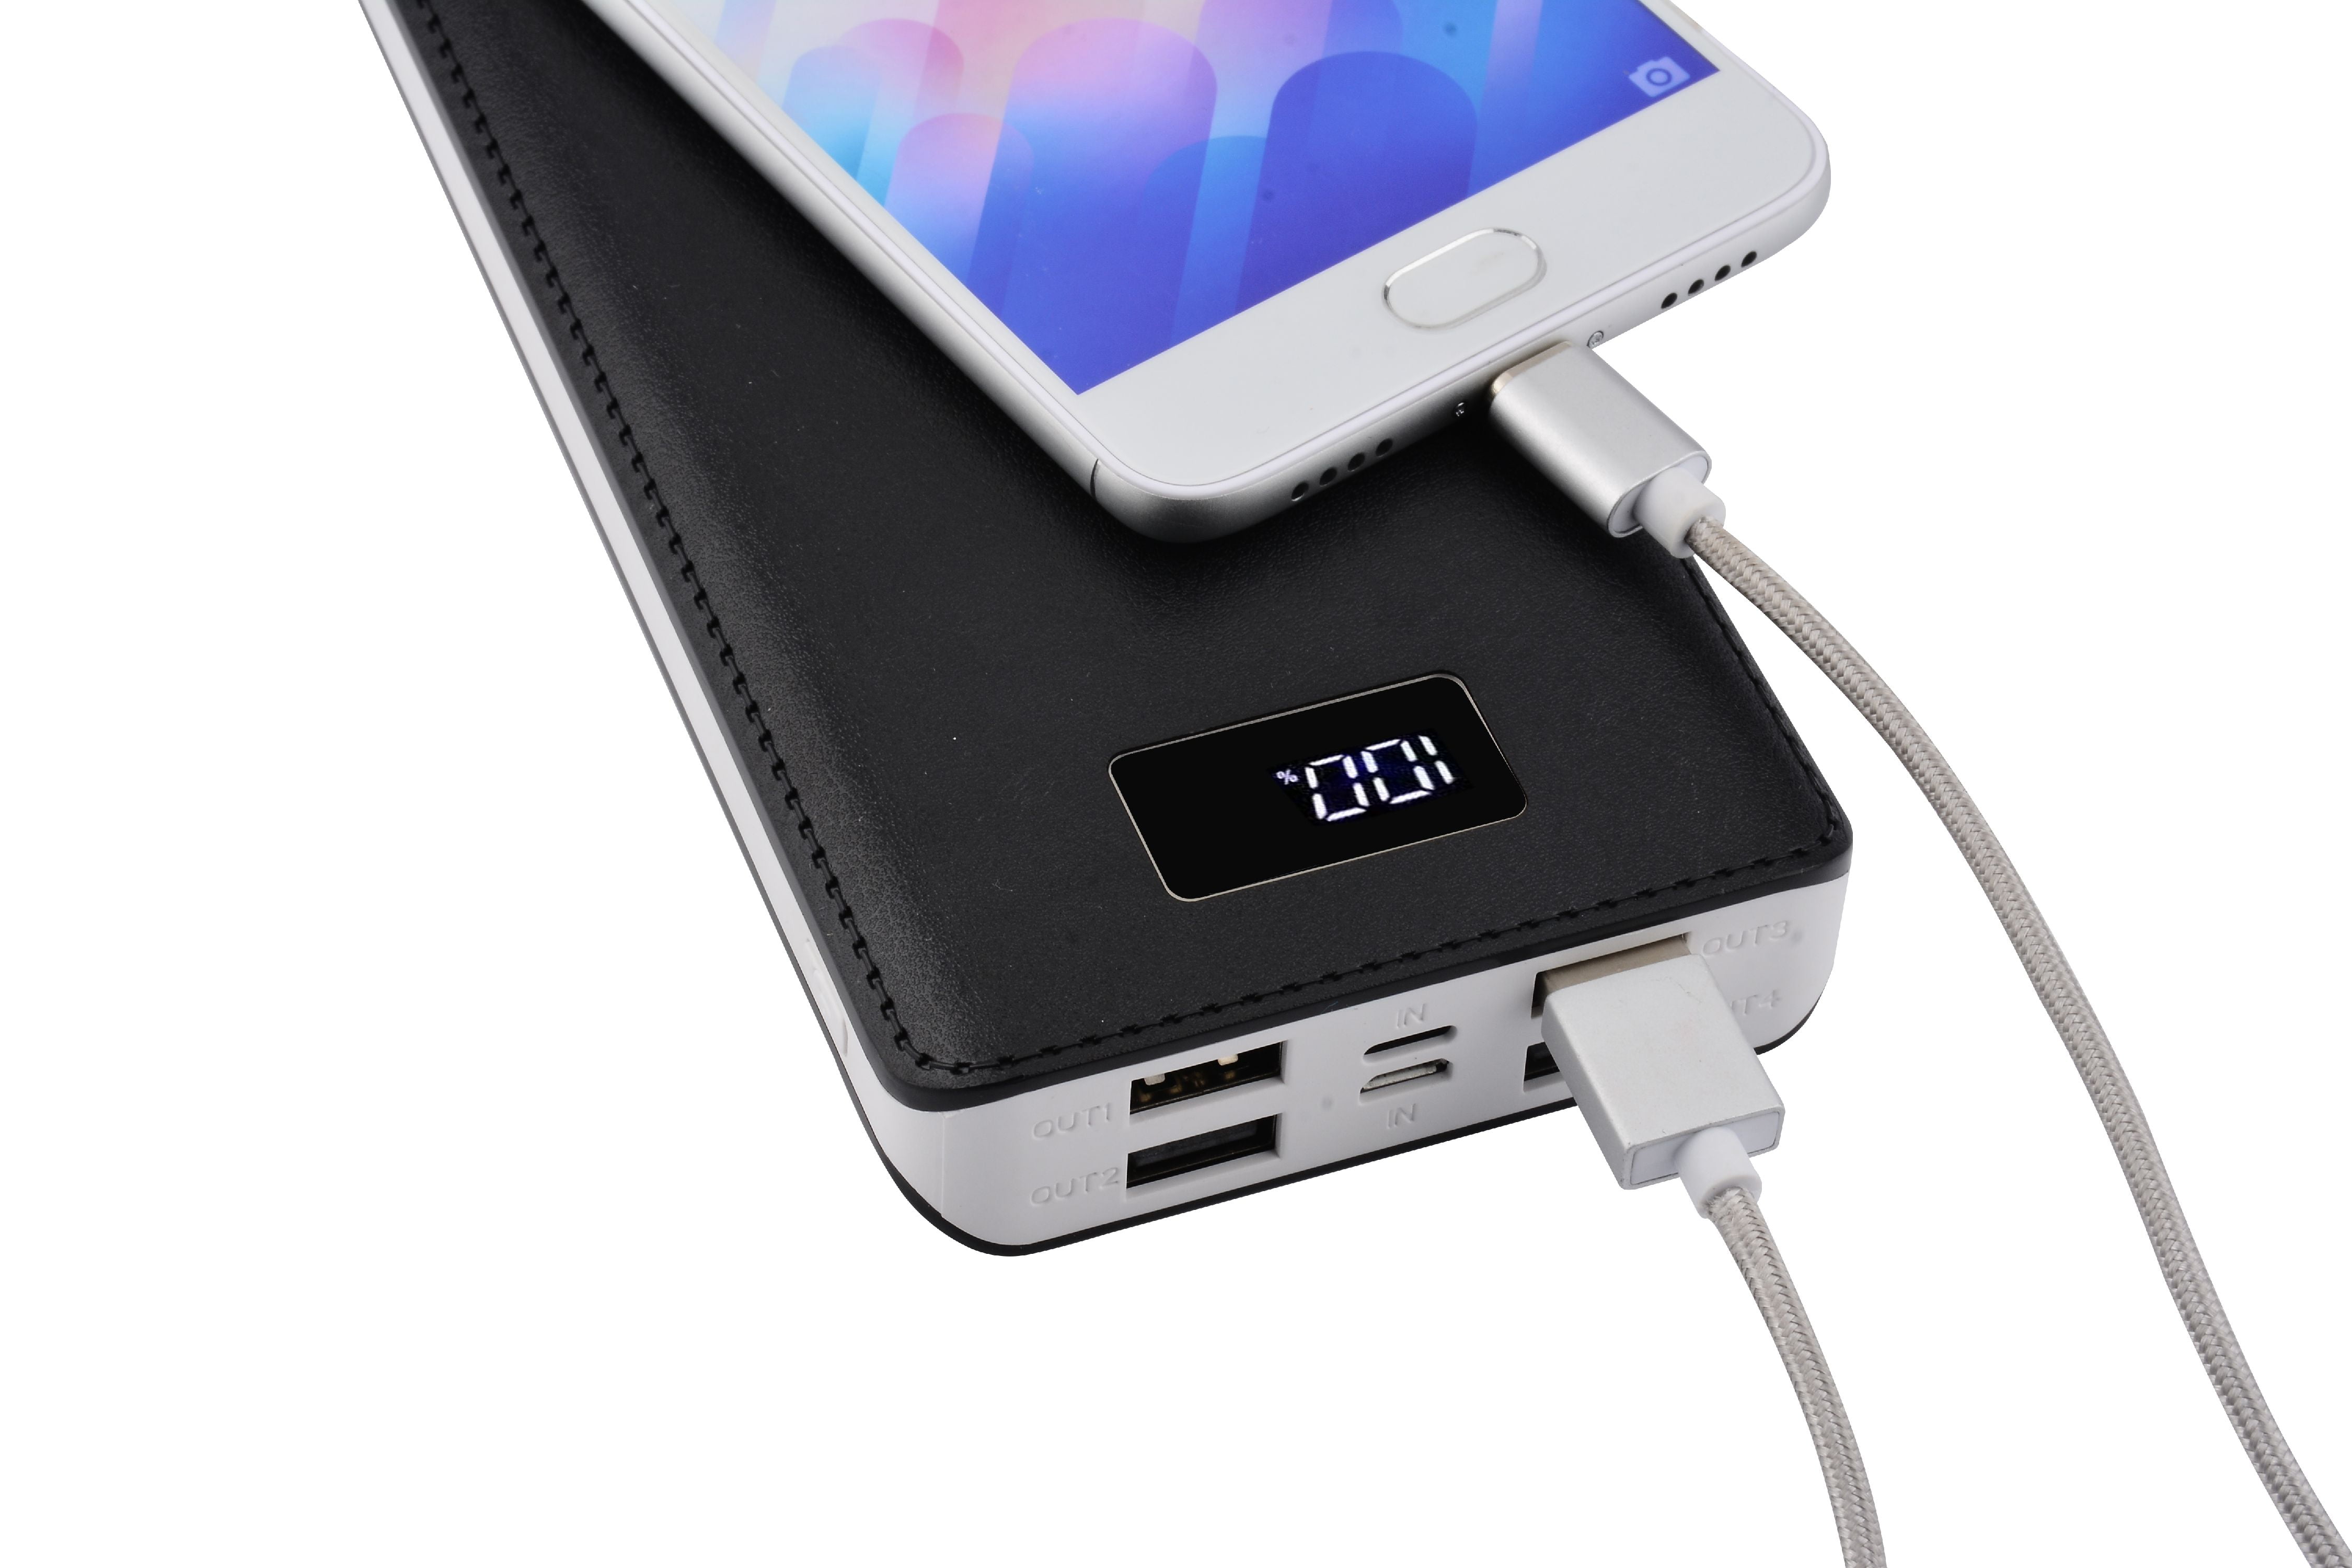 USA 500000mah Portable Power Bank LCD LED 4 USB Battery Charger For Mobile  Phone